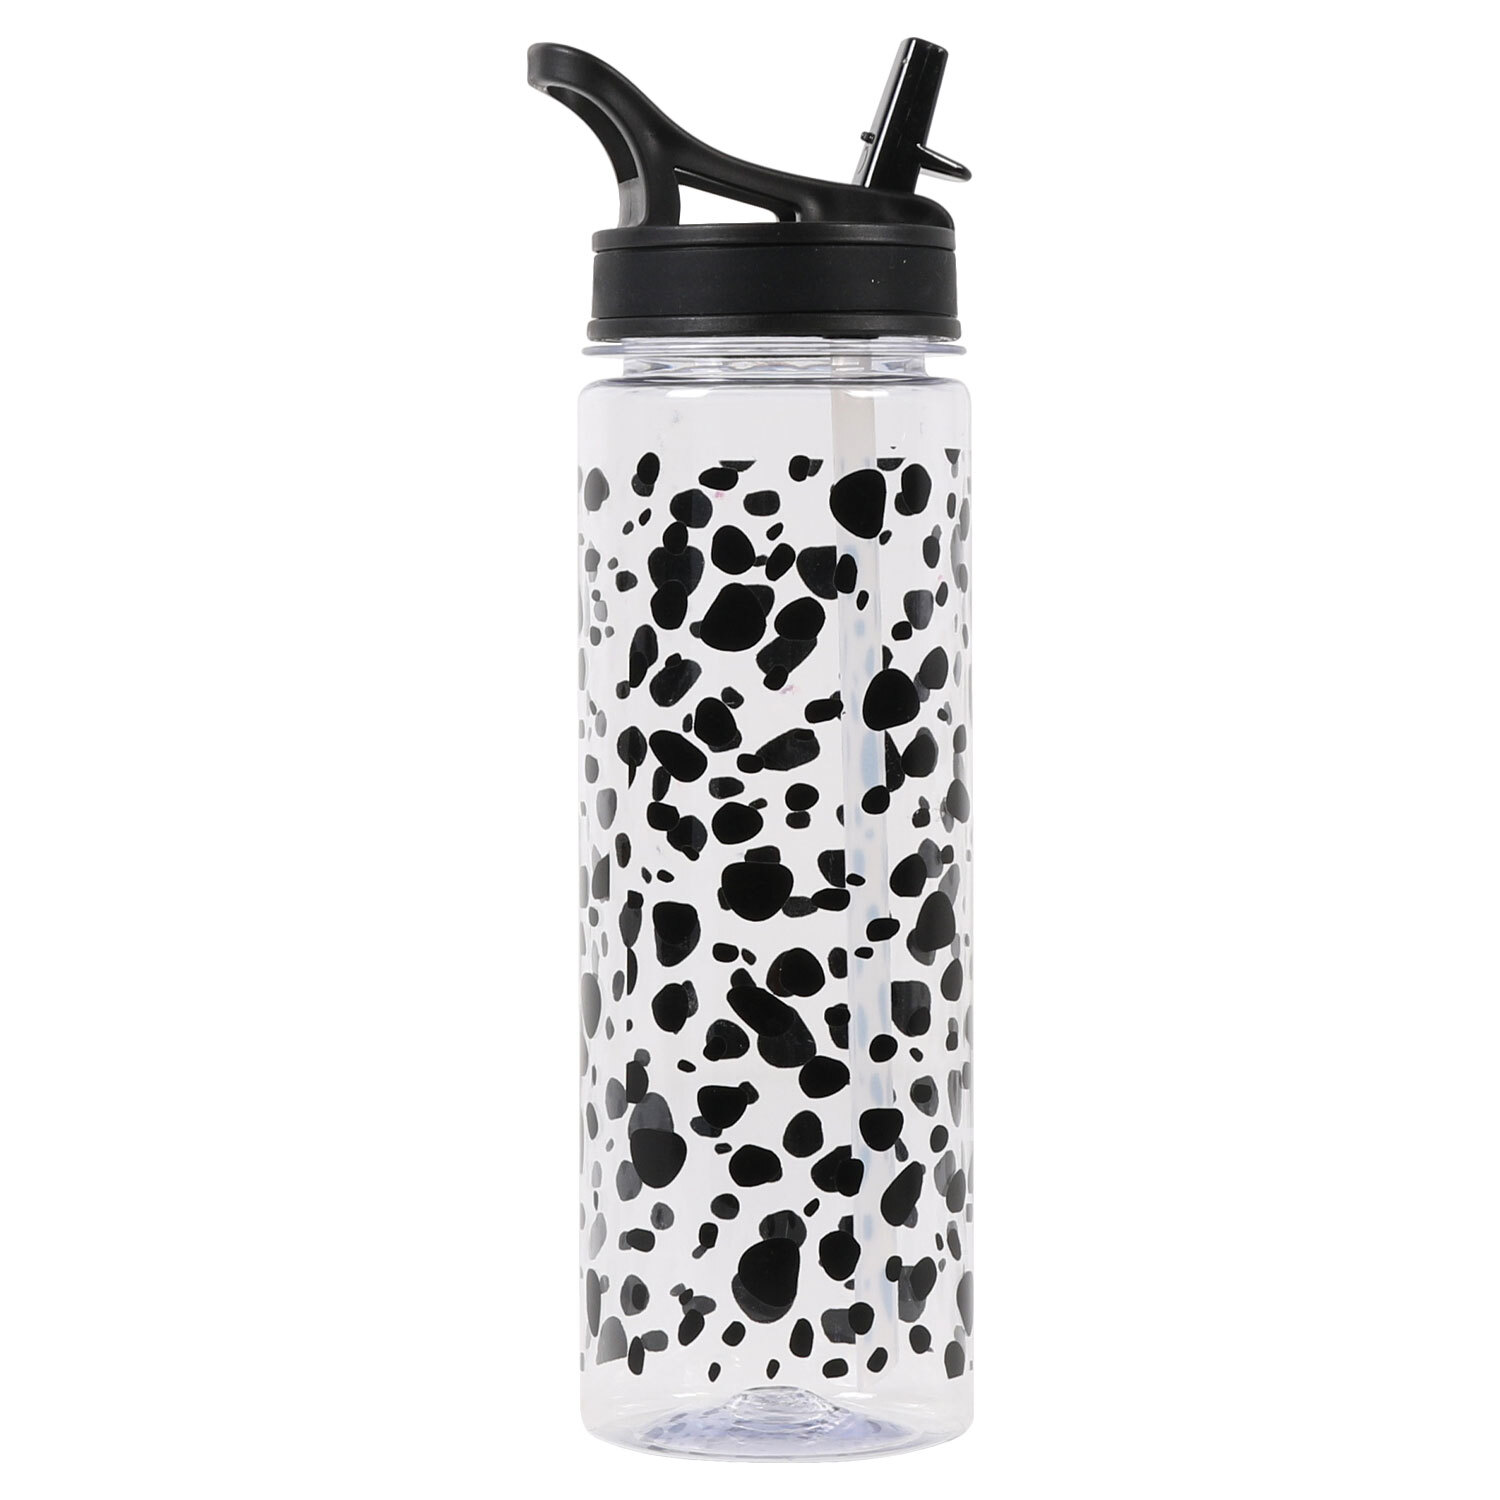 Single Monochrome Sports Water Bottle 700ml in Assorted styles Image